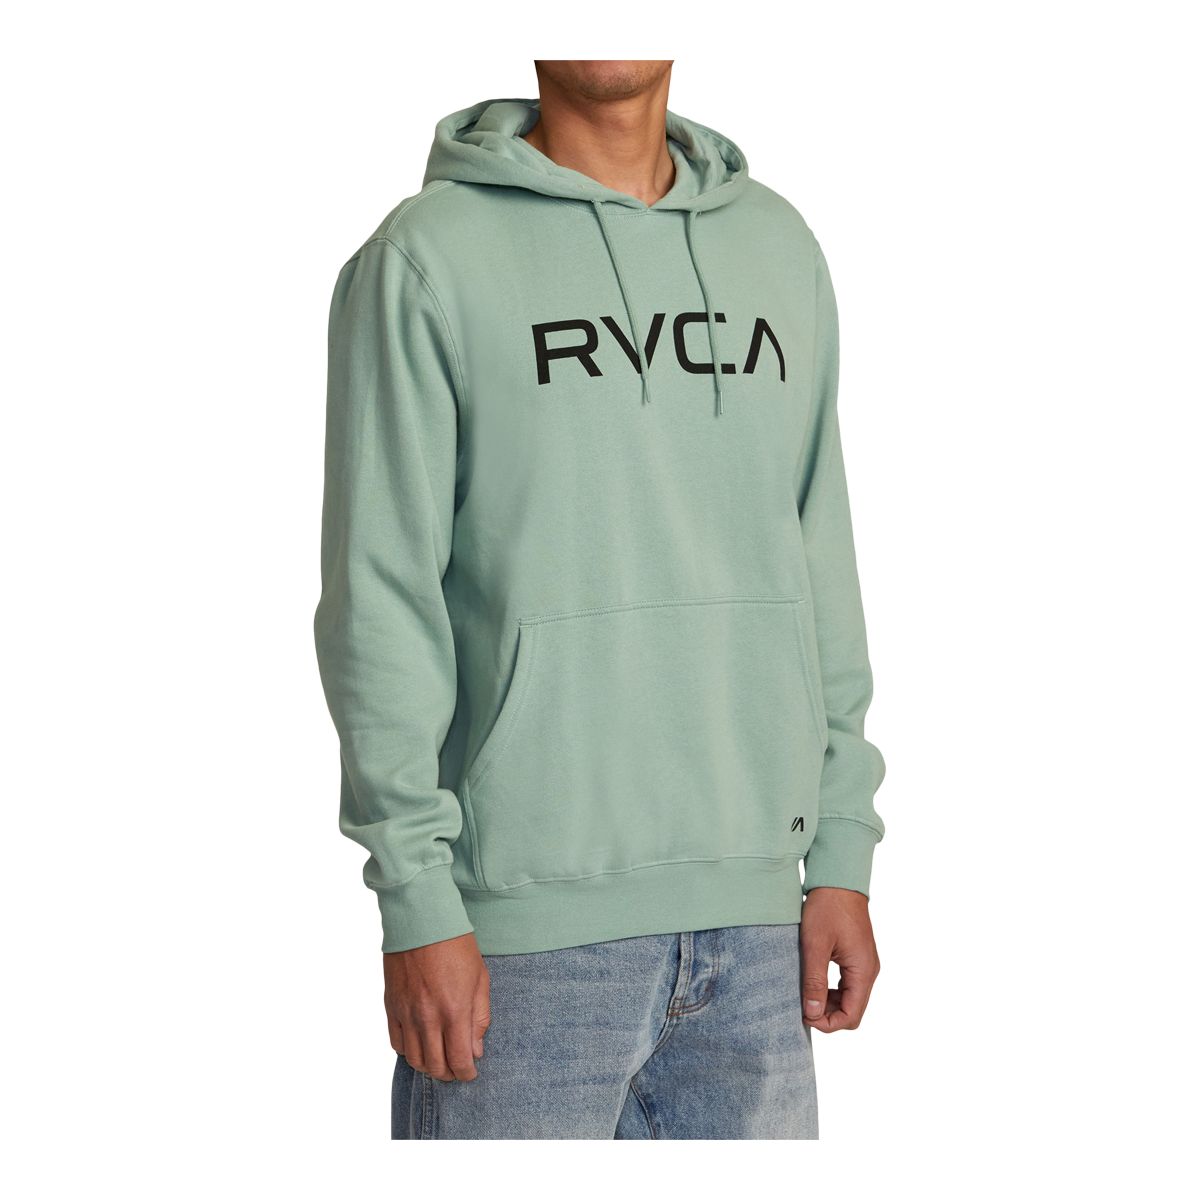 RVCA Men's Big RVCA Pullover Hoodie